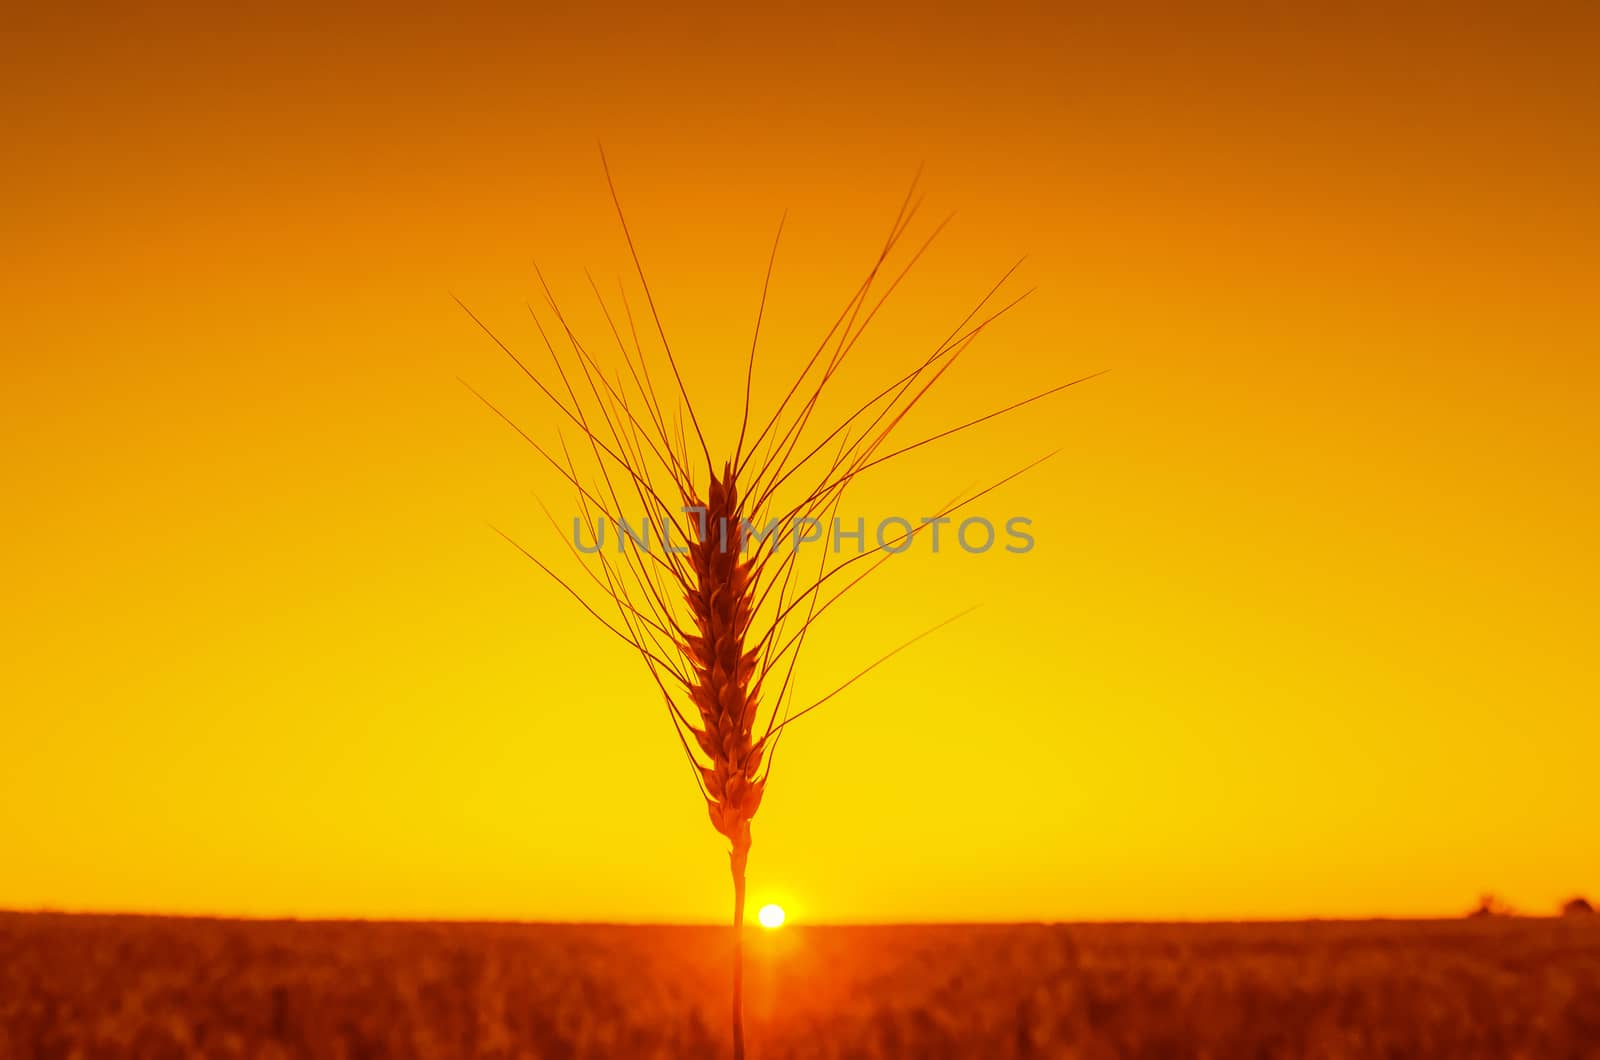 one ear of wheat on orange sunset